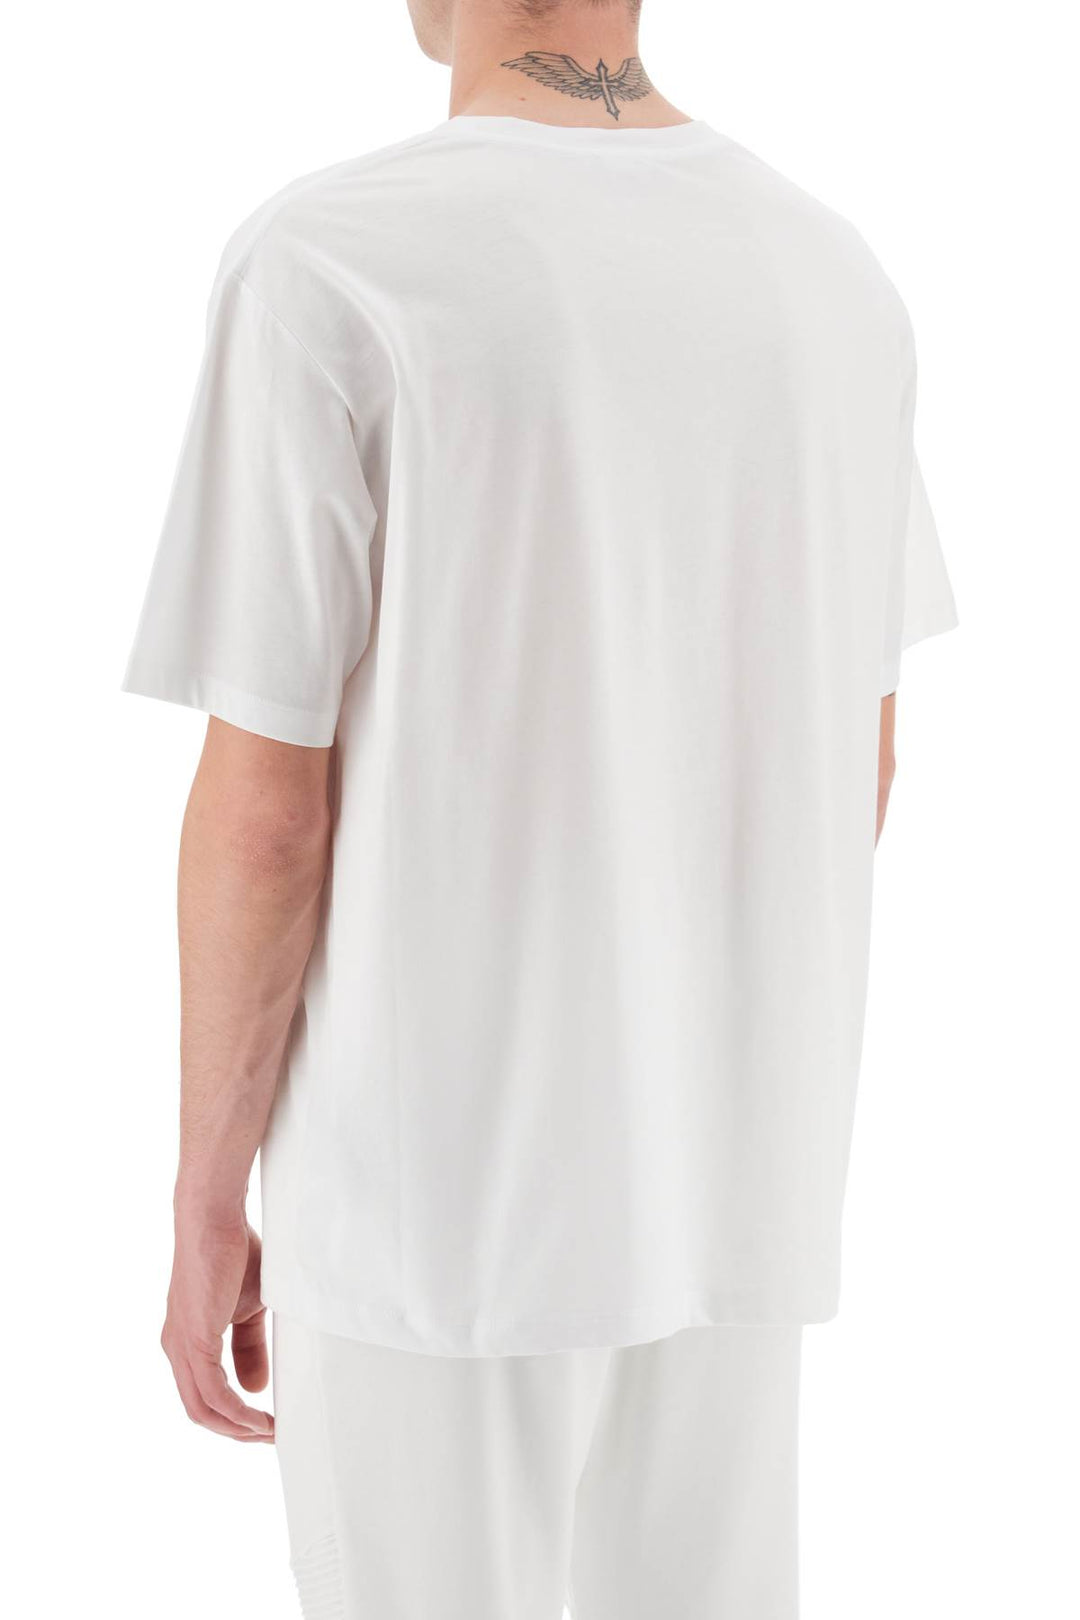 Balmain Logo Print T Shirt   White